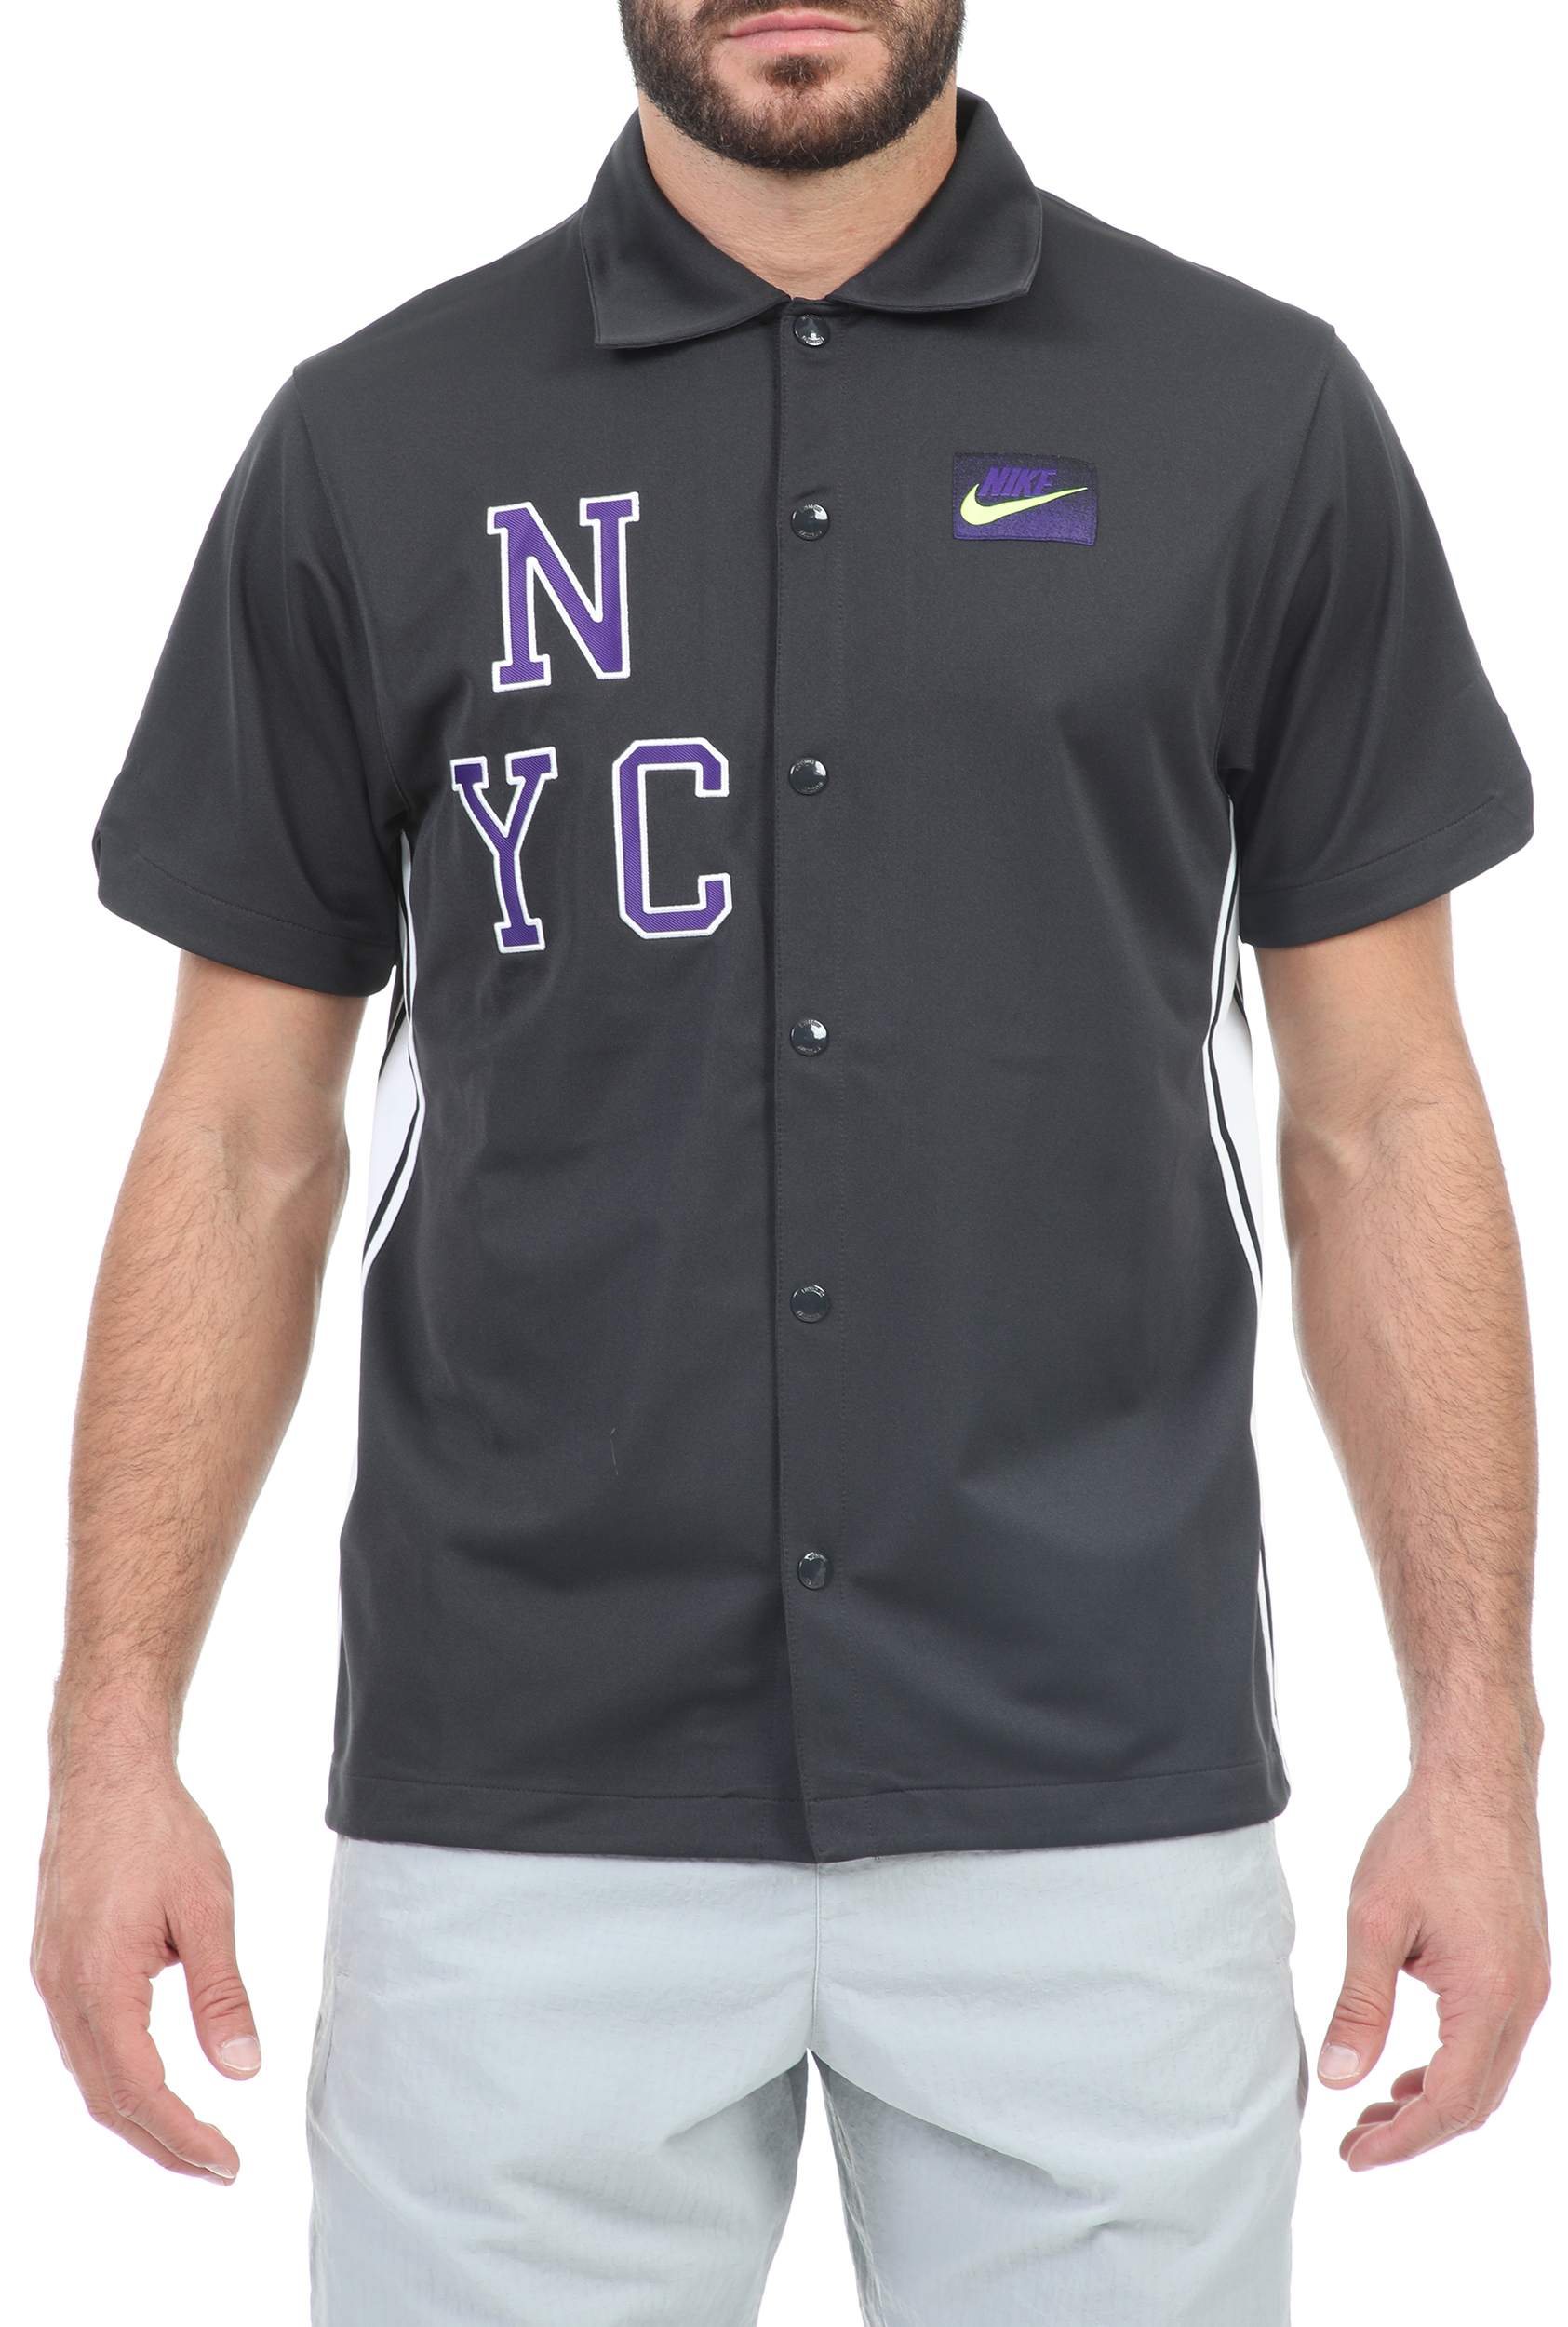 NIKE - Ανδρικό πουκάμισο τένις NIKE CT TOP SS NY μαύρο Ανδρικά/Ρούχα/Αθλητικά/T-shirt